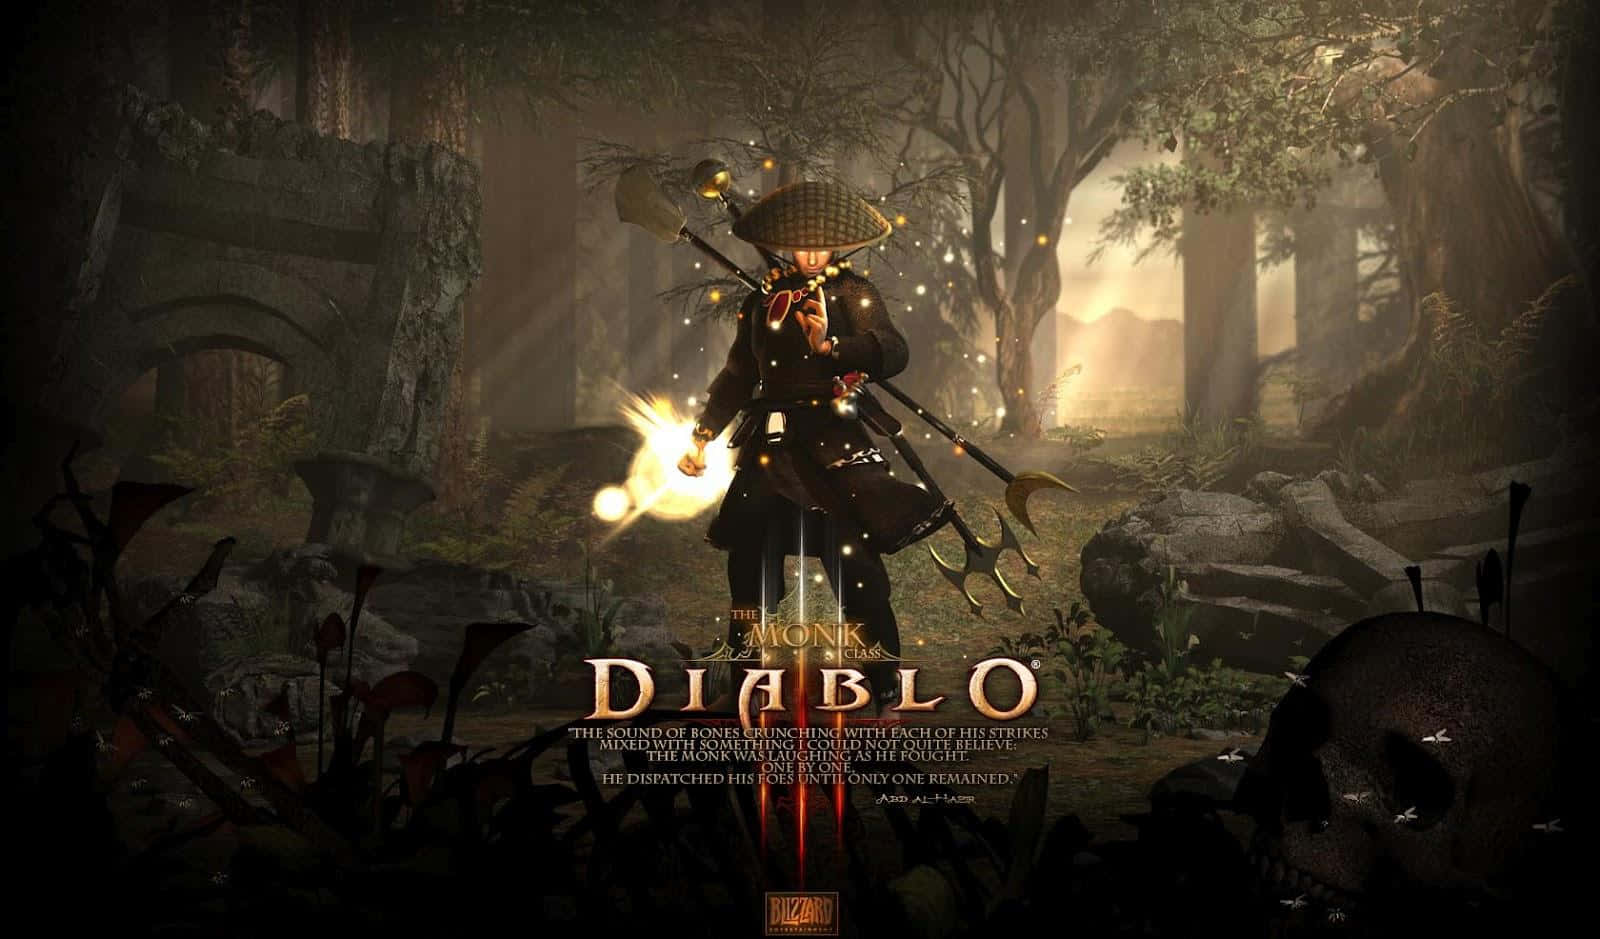 Diablo3 - Papel De Parede. Papel de Parede